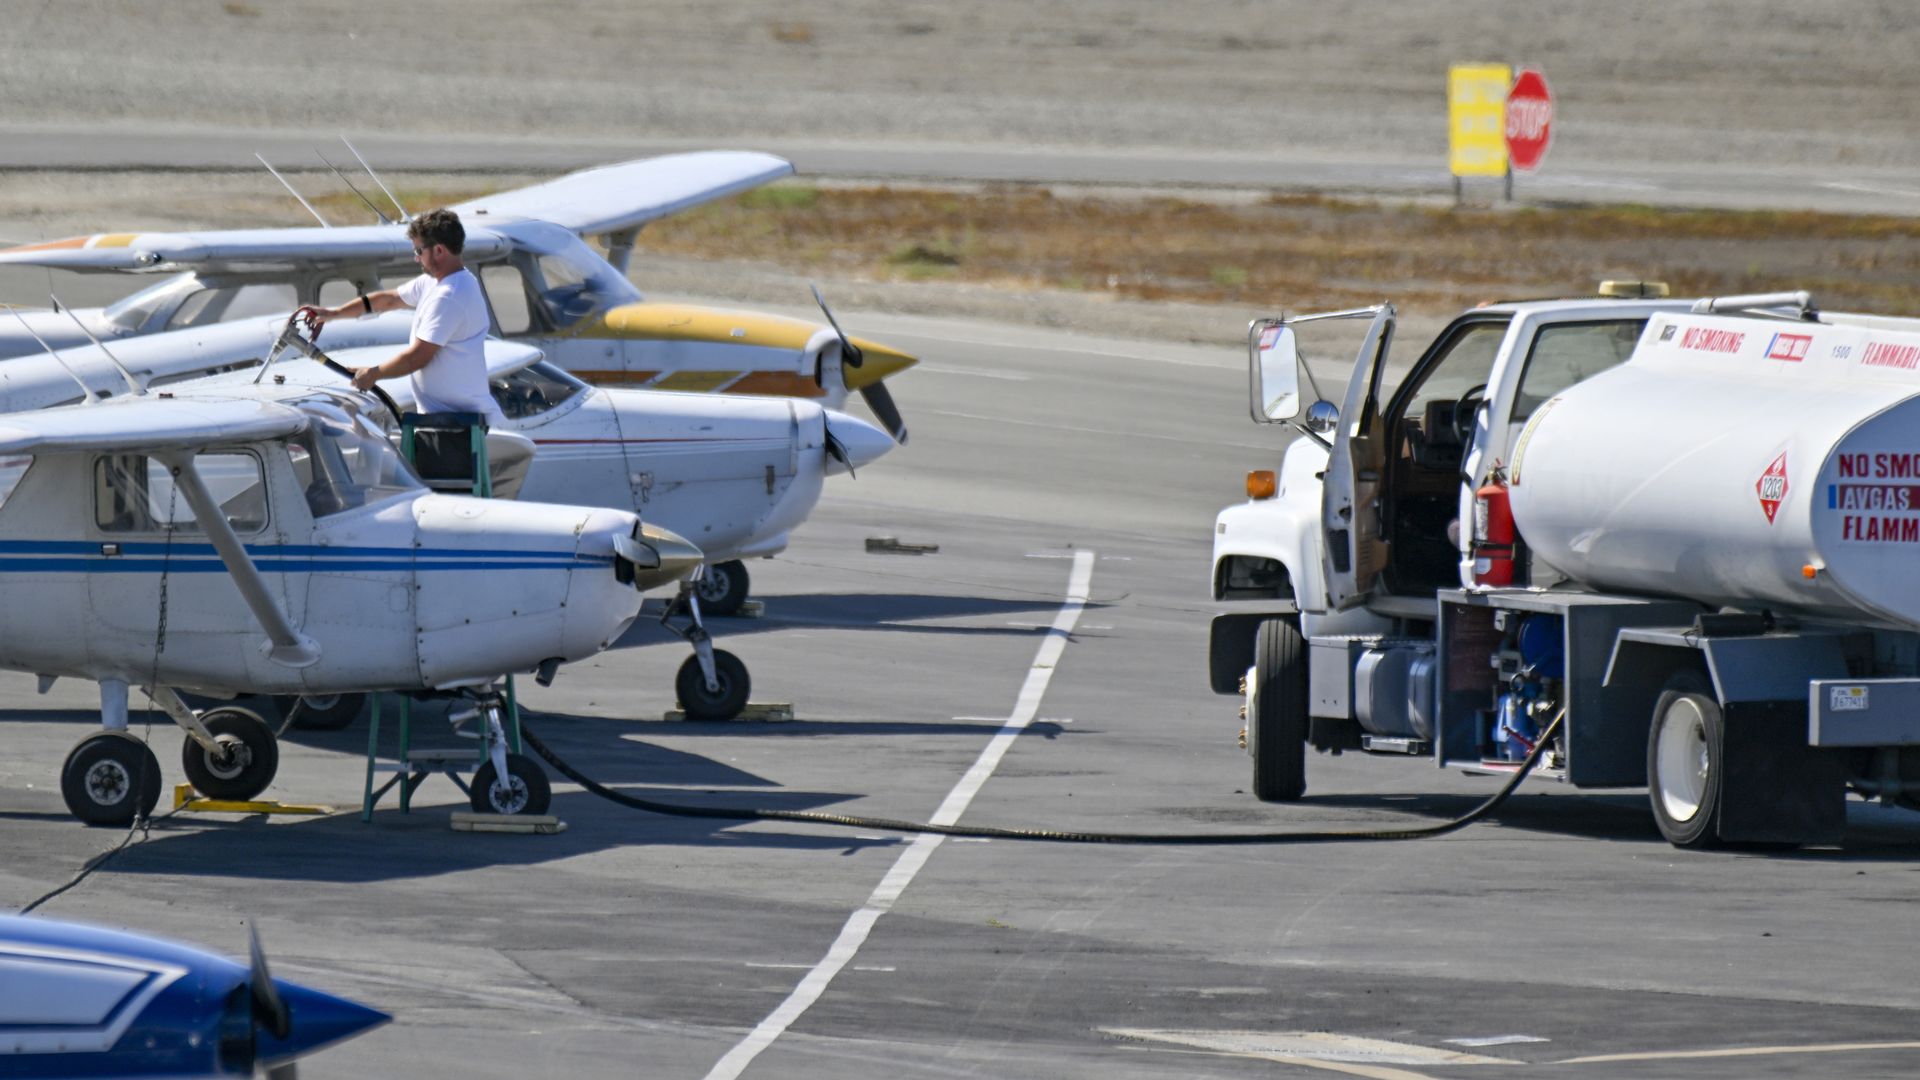 A worker fuels an aircraft at Long Beach Airport on Monday, September 12, 2022.